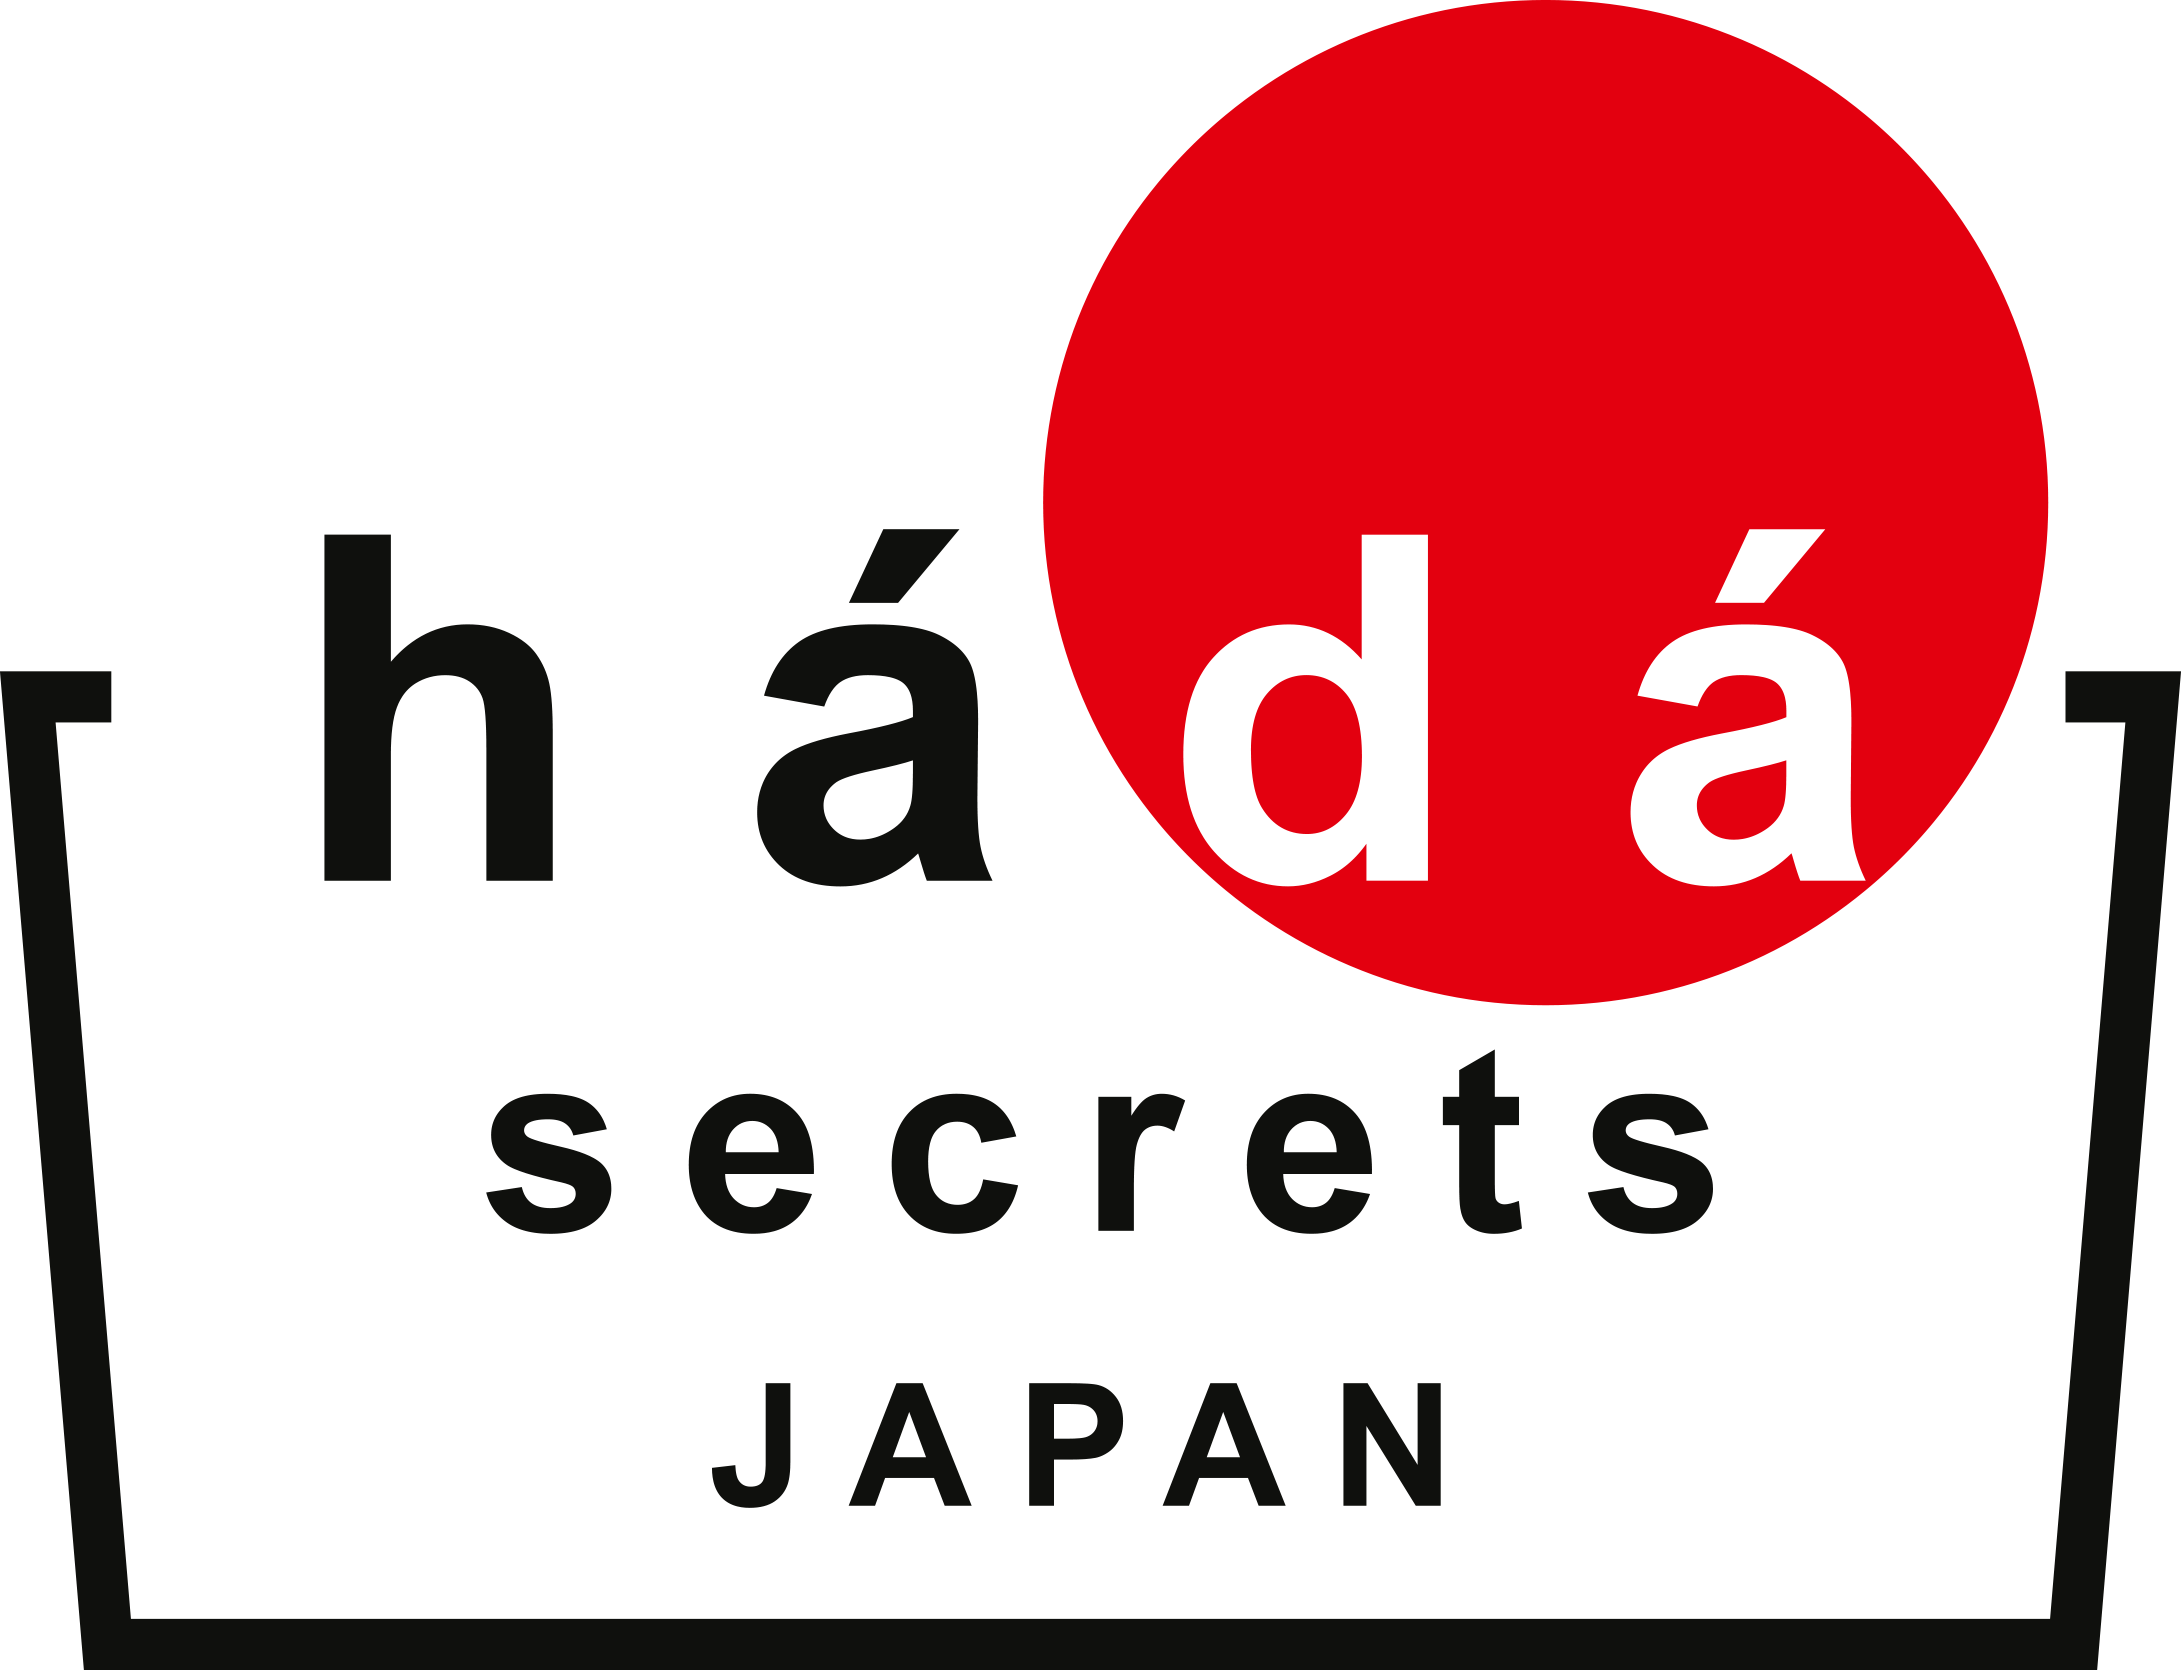 Hada Secrets